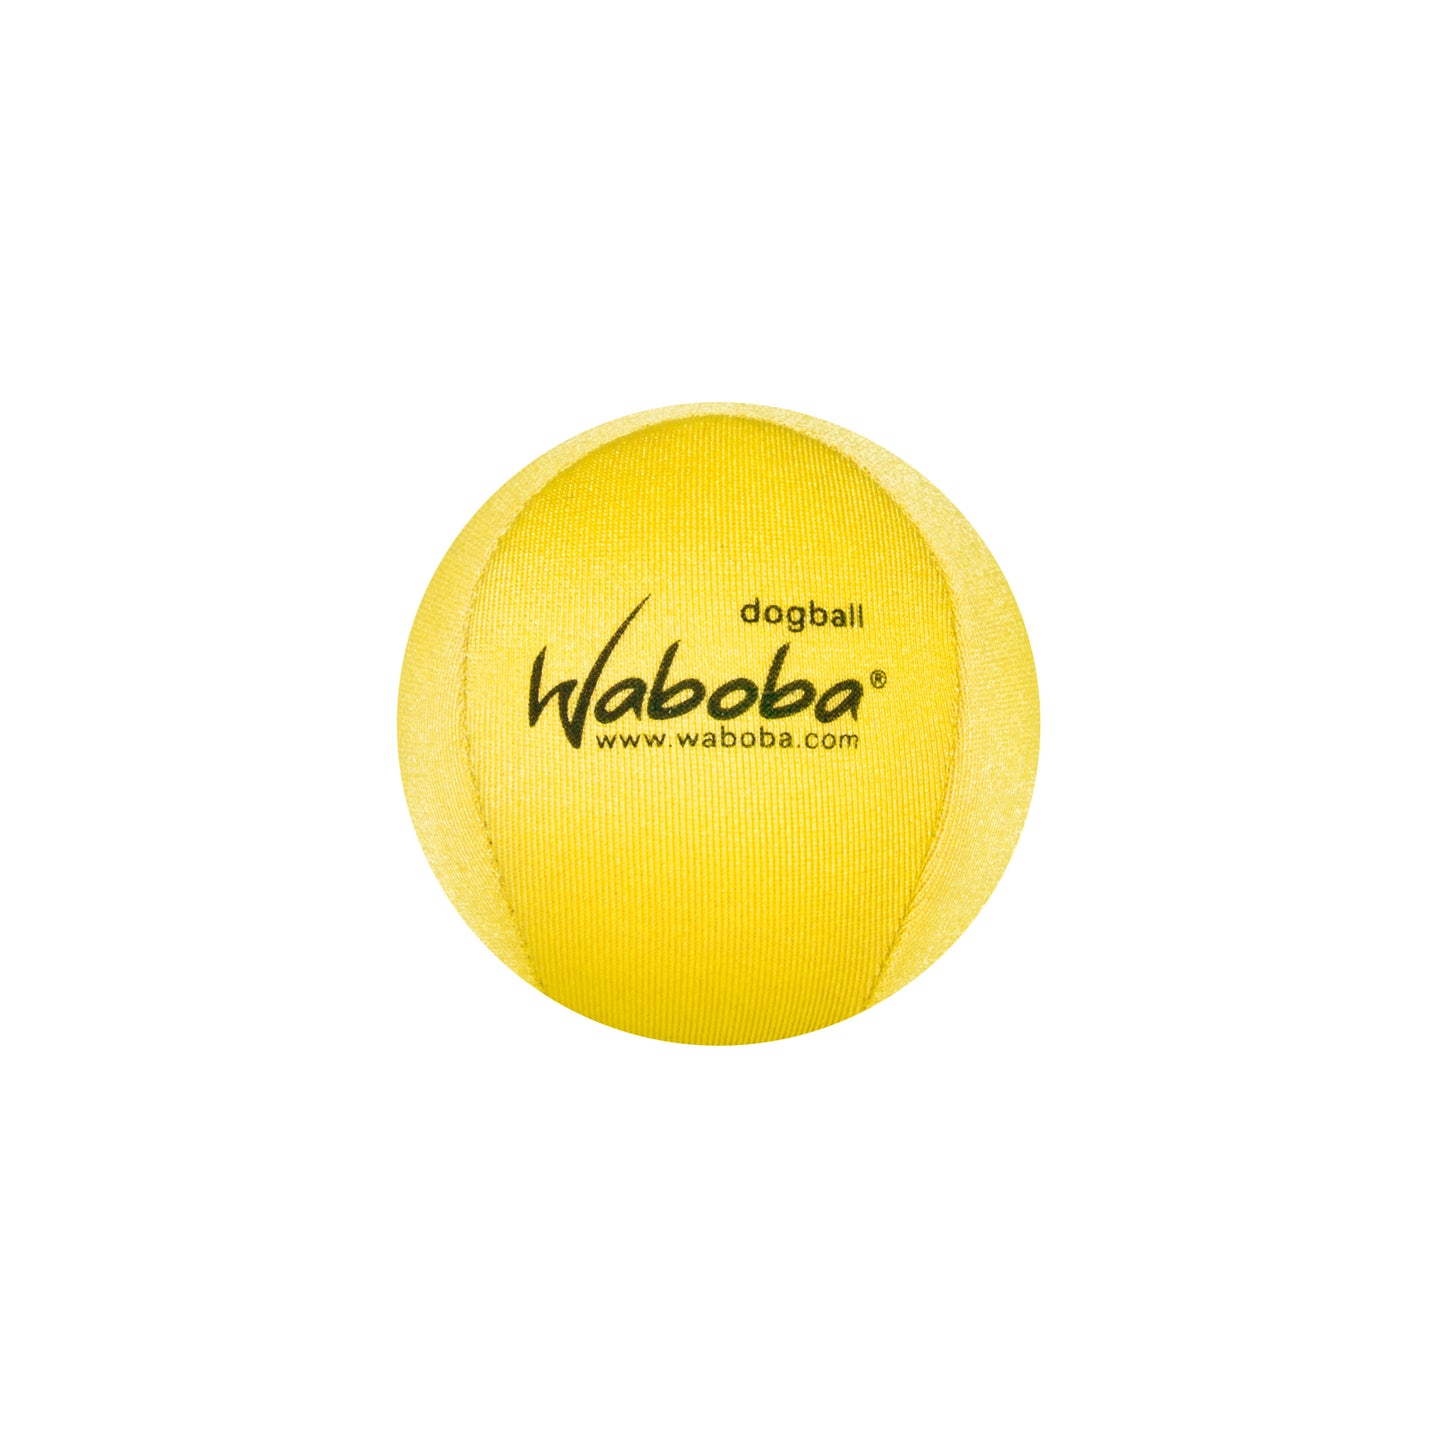 Waboba Fetch Ball